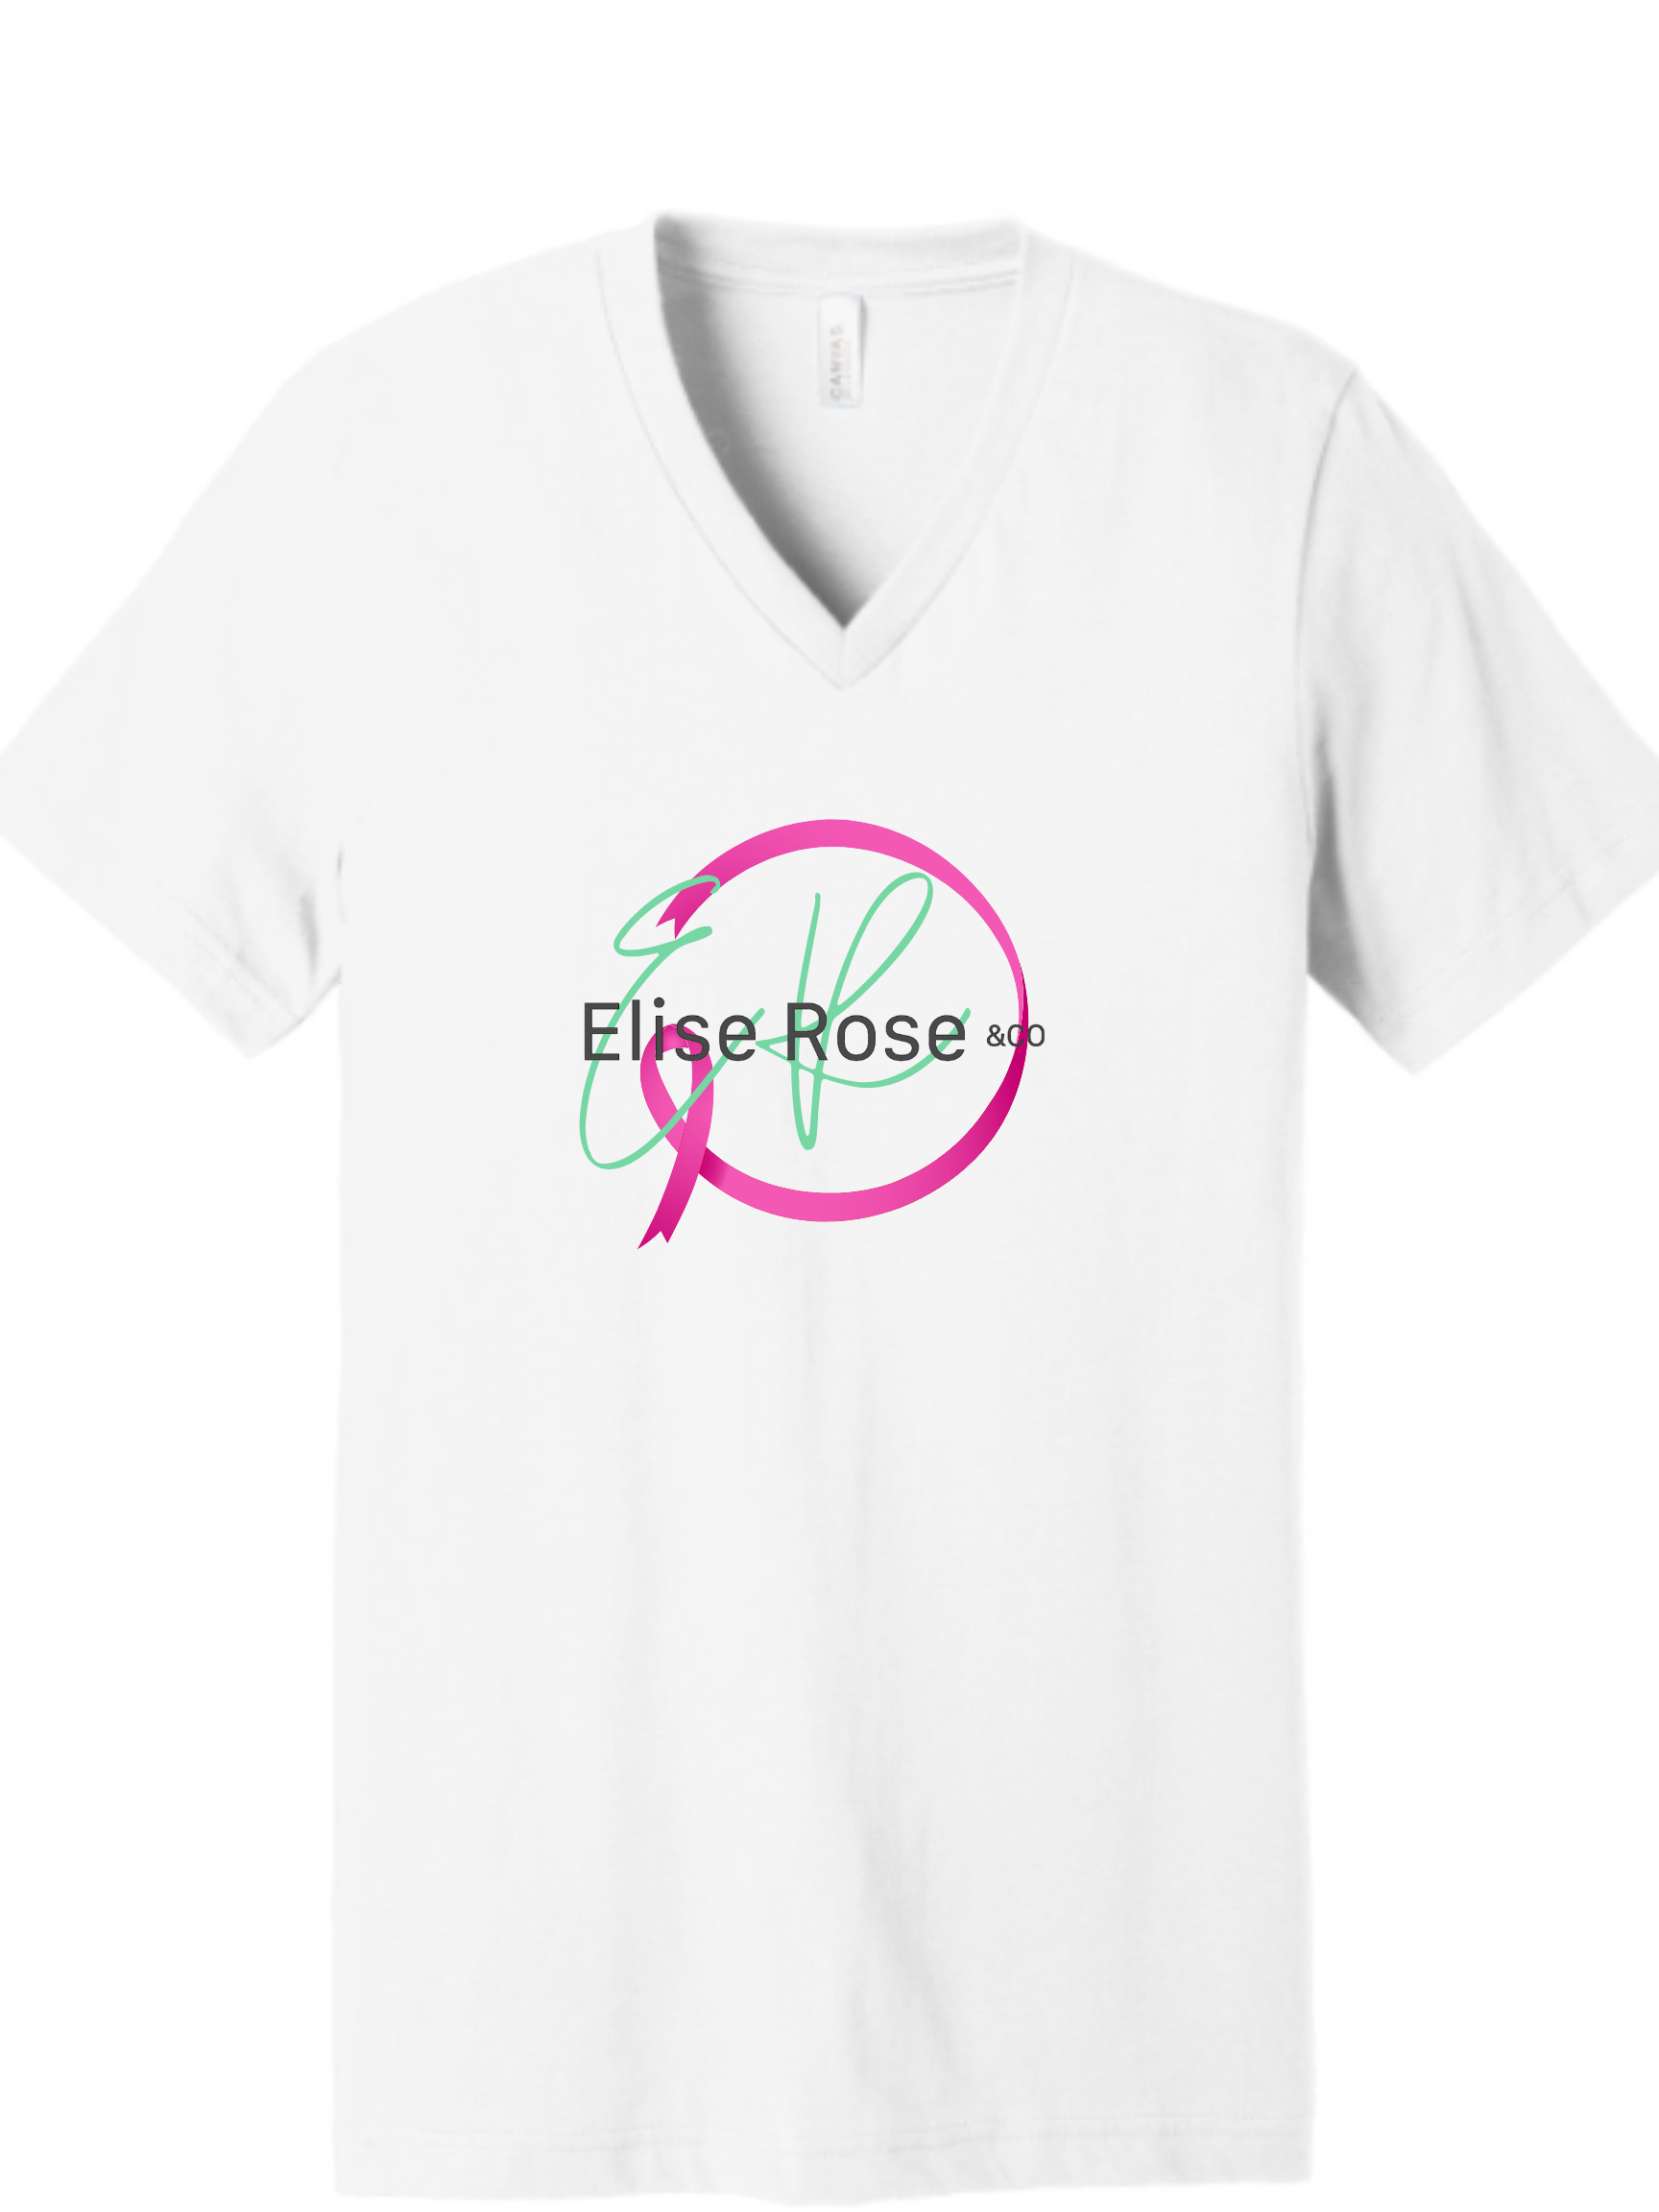 Elise Rose & Co Breast Cancer Awareness T Shirts